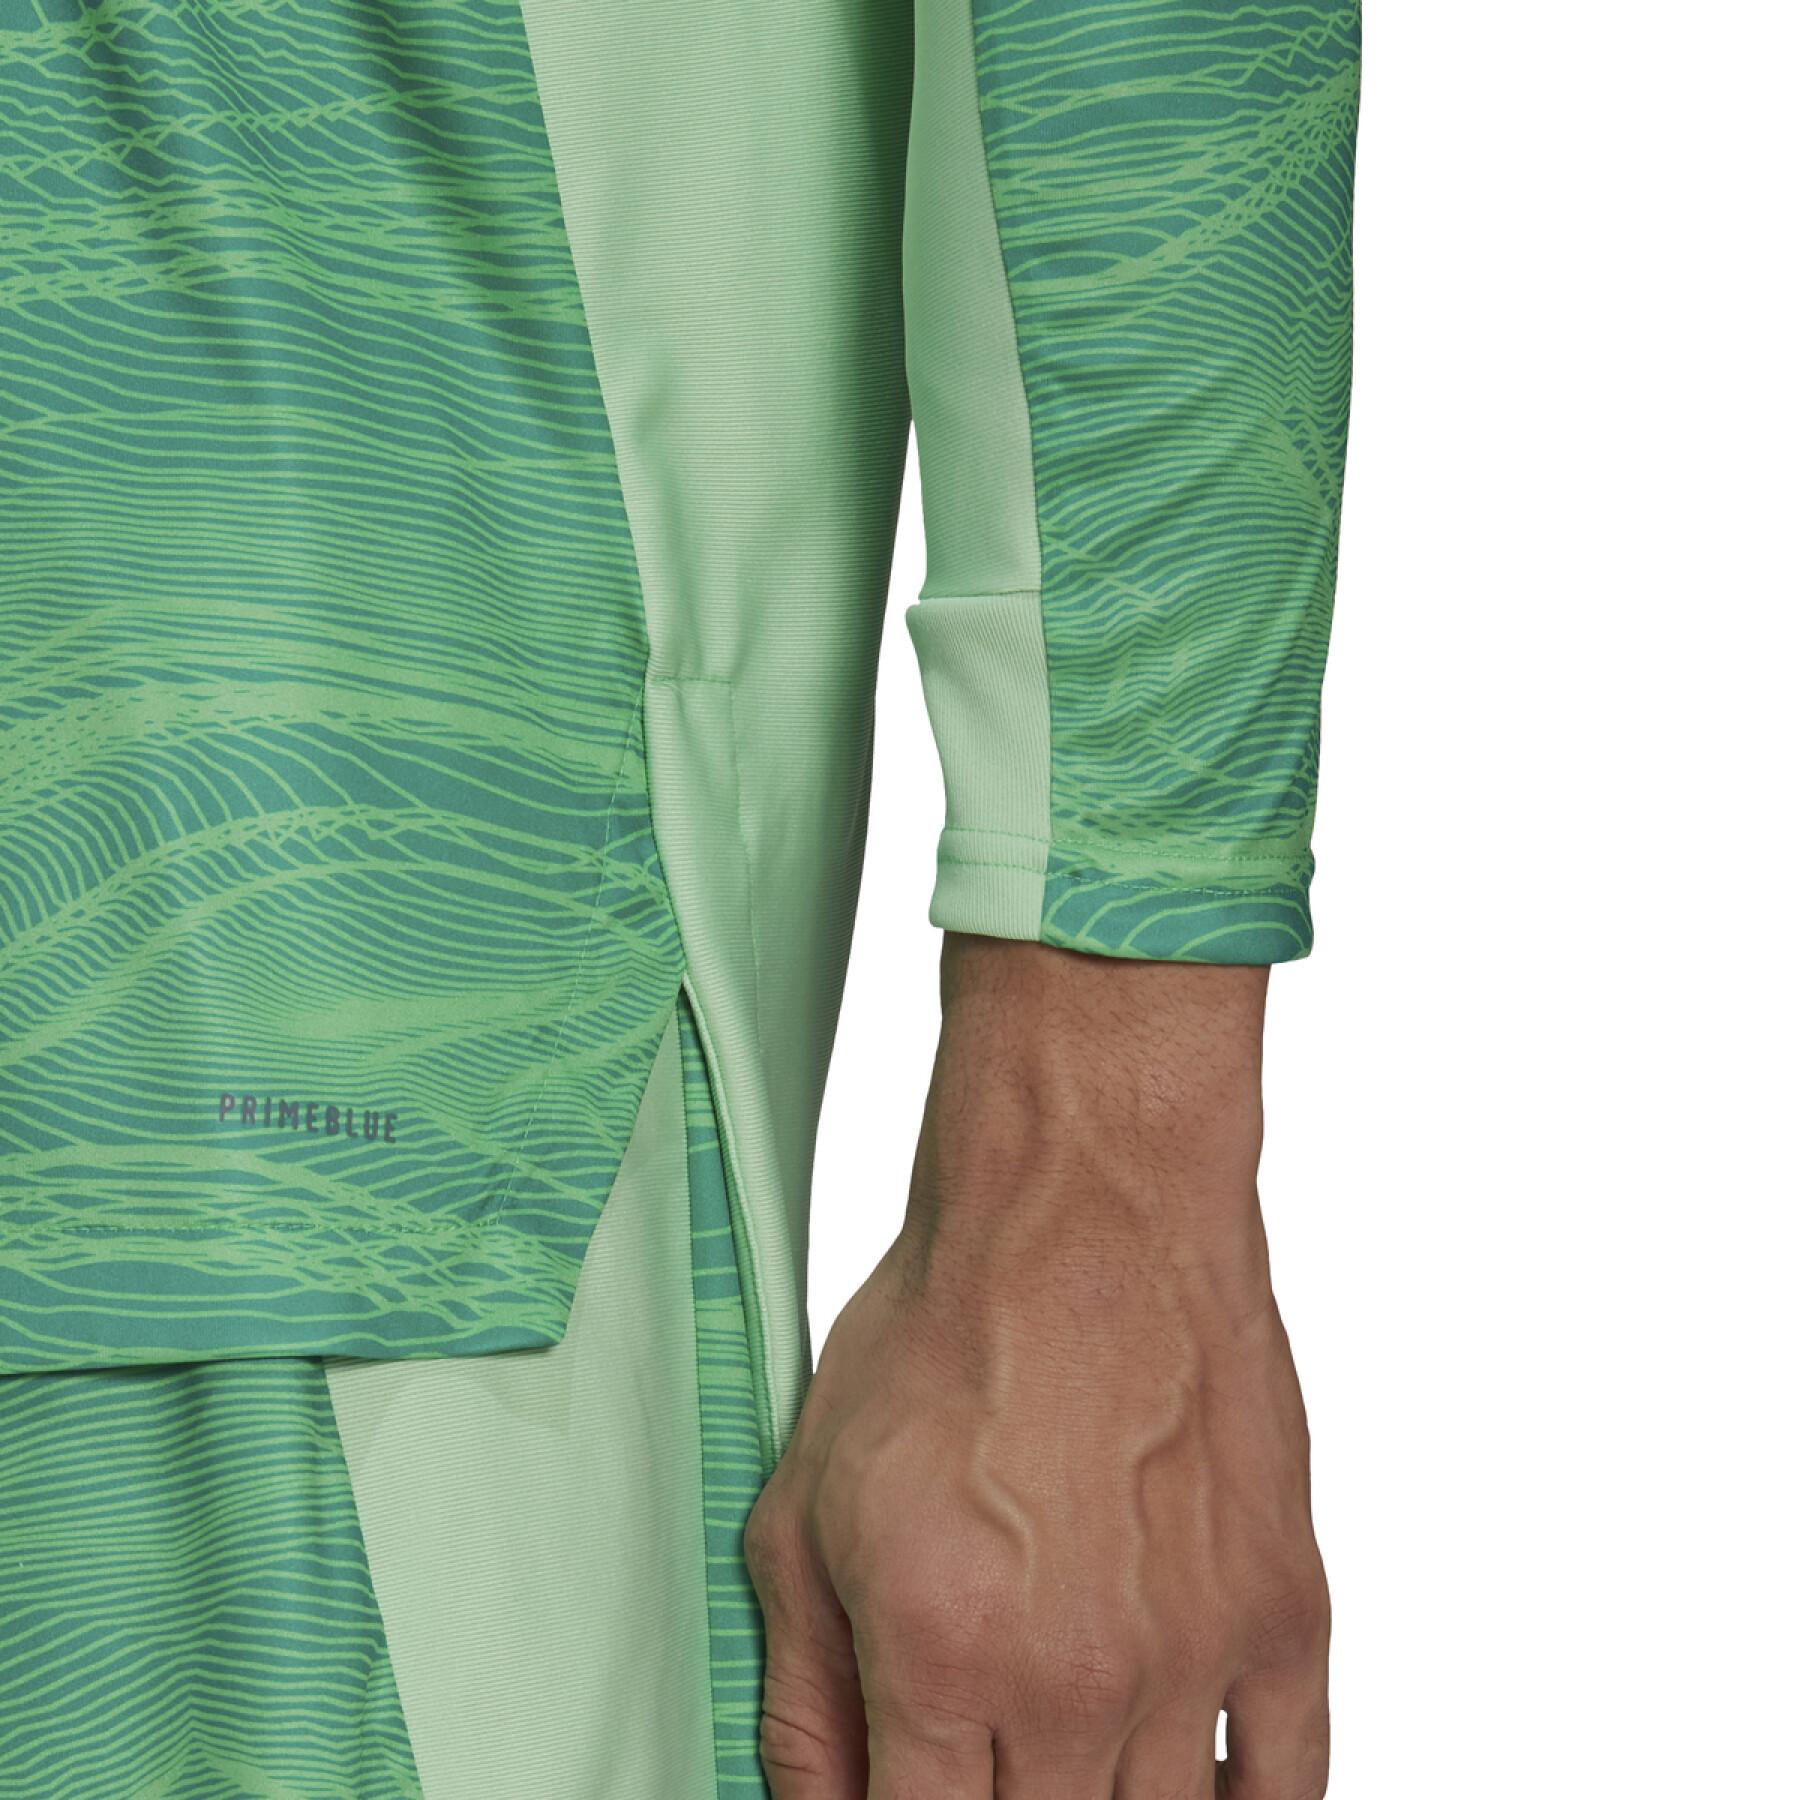 Camisola de manga comprida para guarda-redes adidas Condivo 21 Primeblue